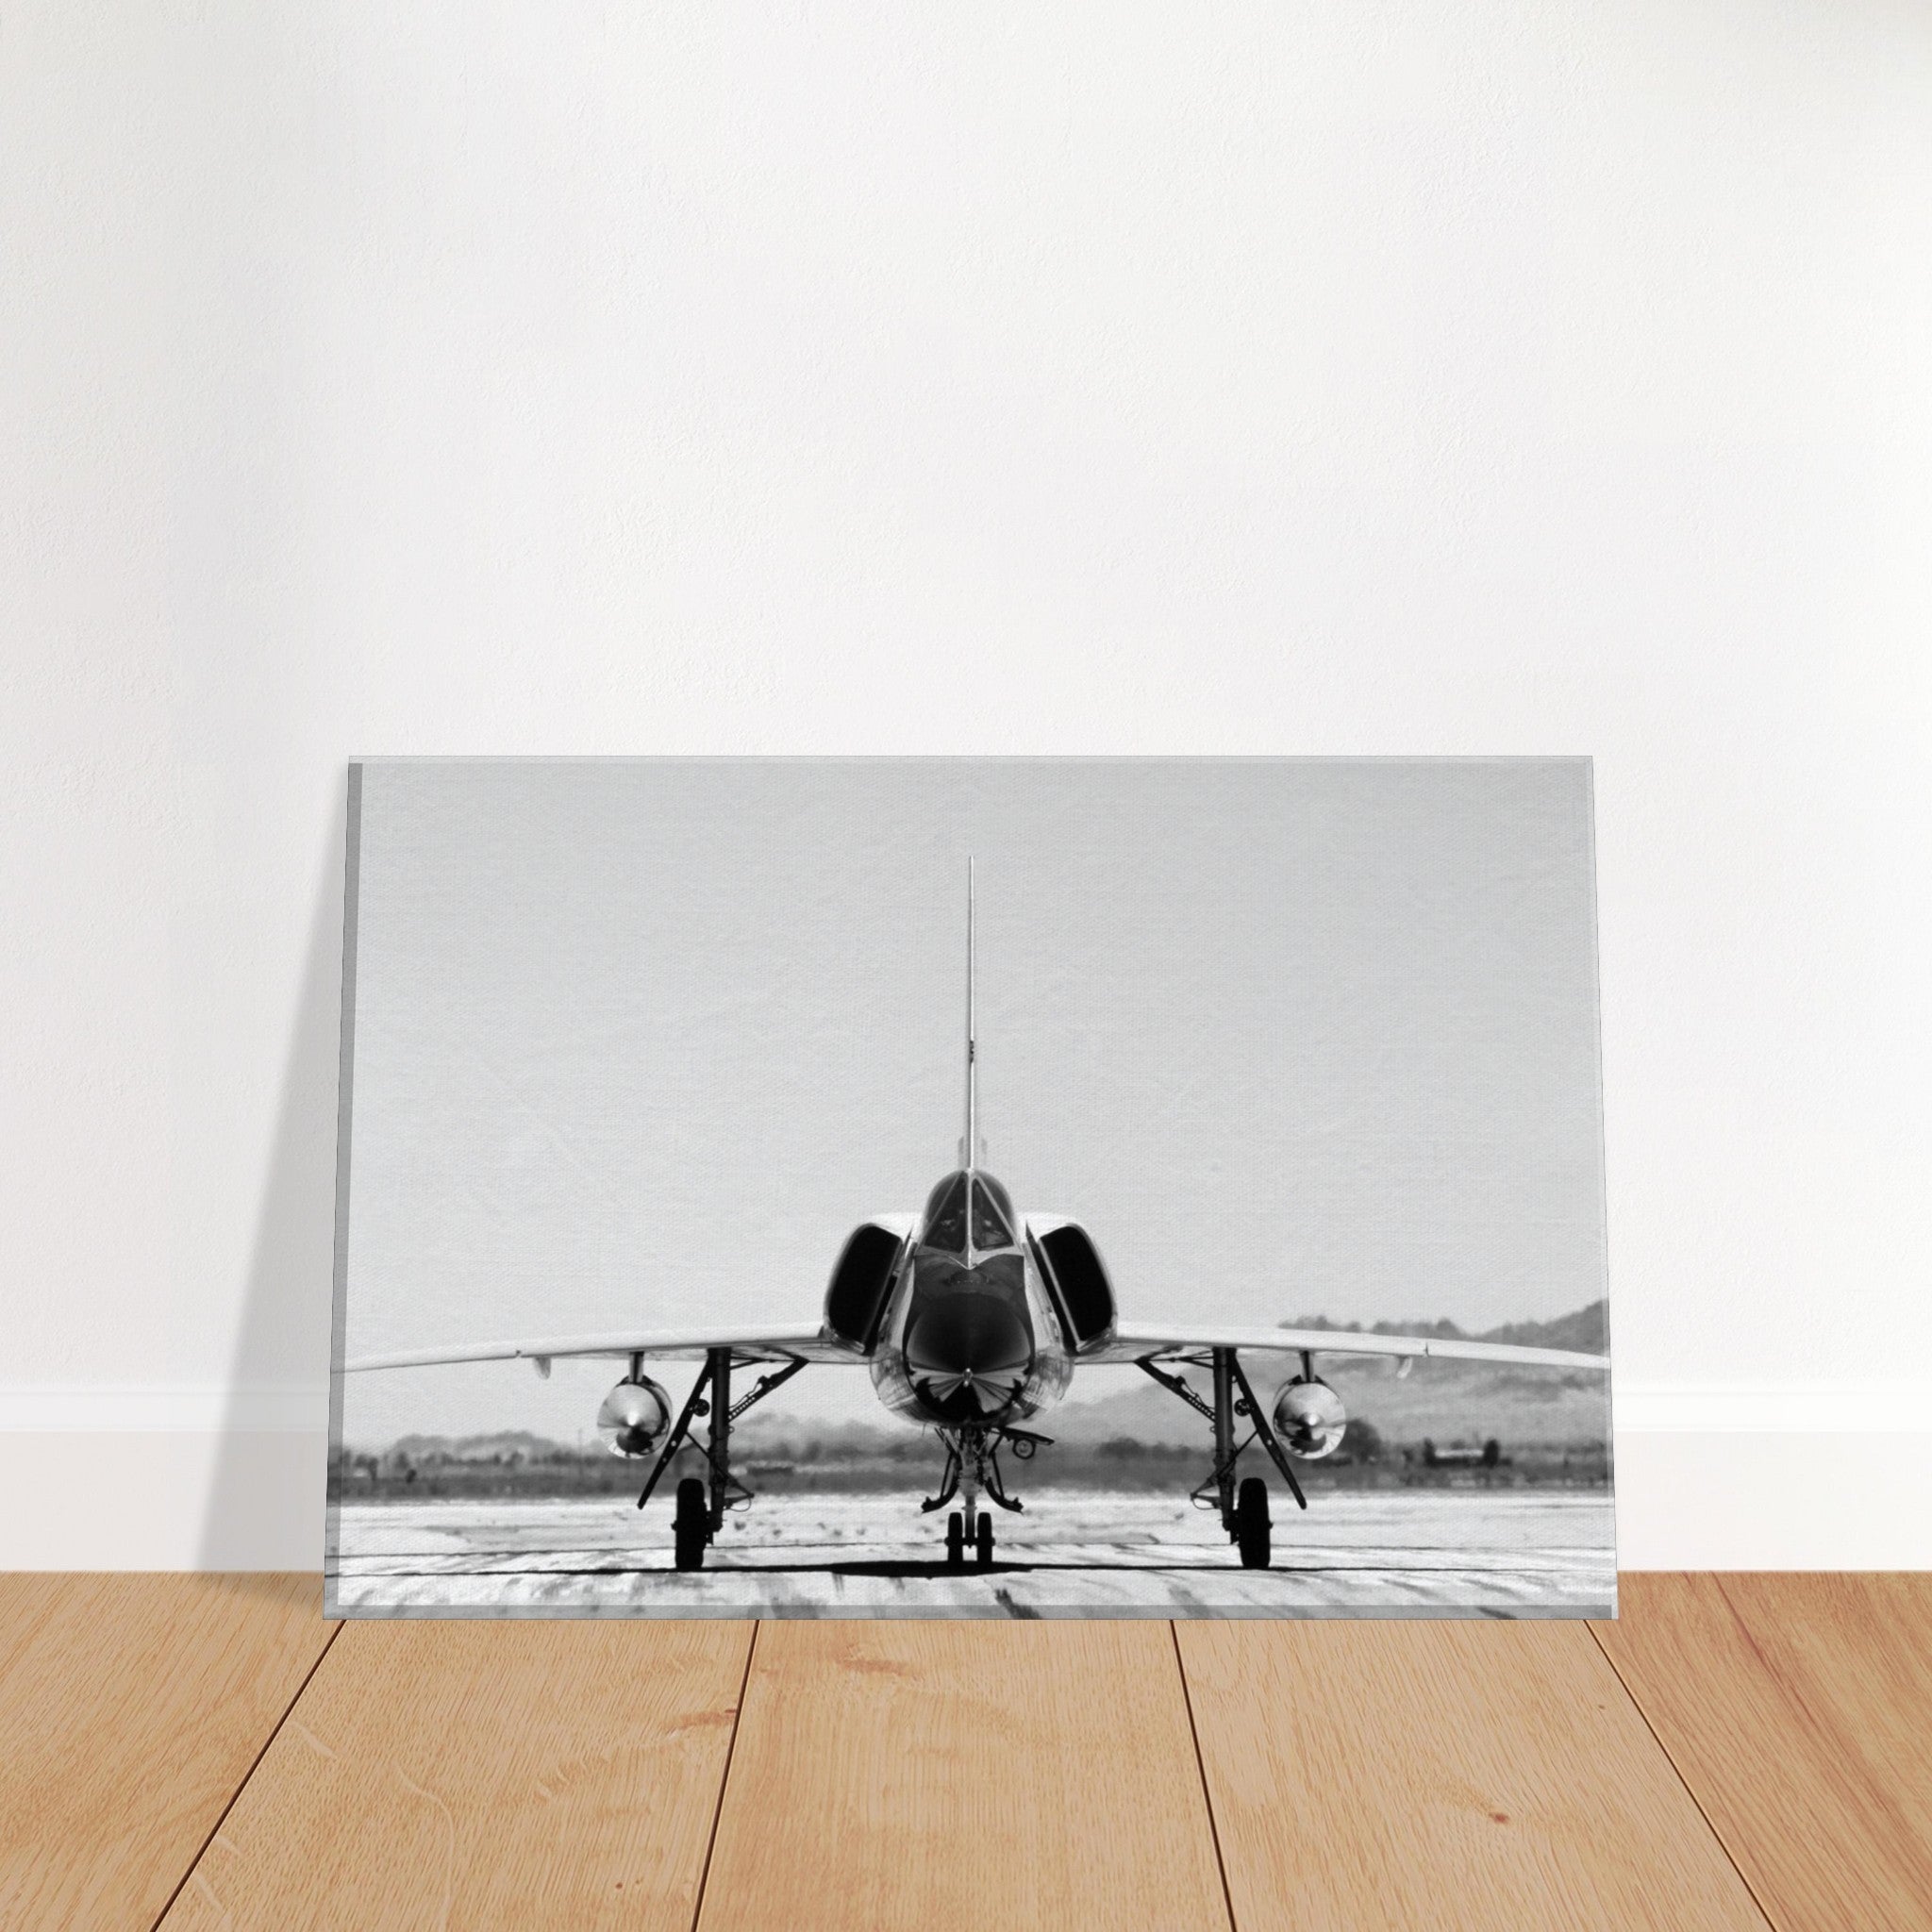 F-106 "Delta Dart" on Canvas - I Love a Hangar